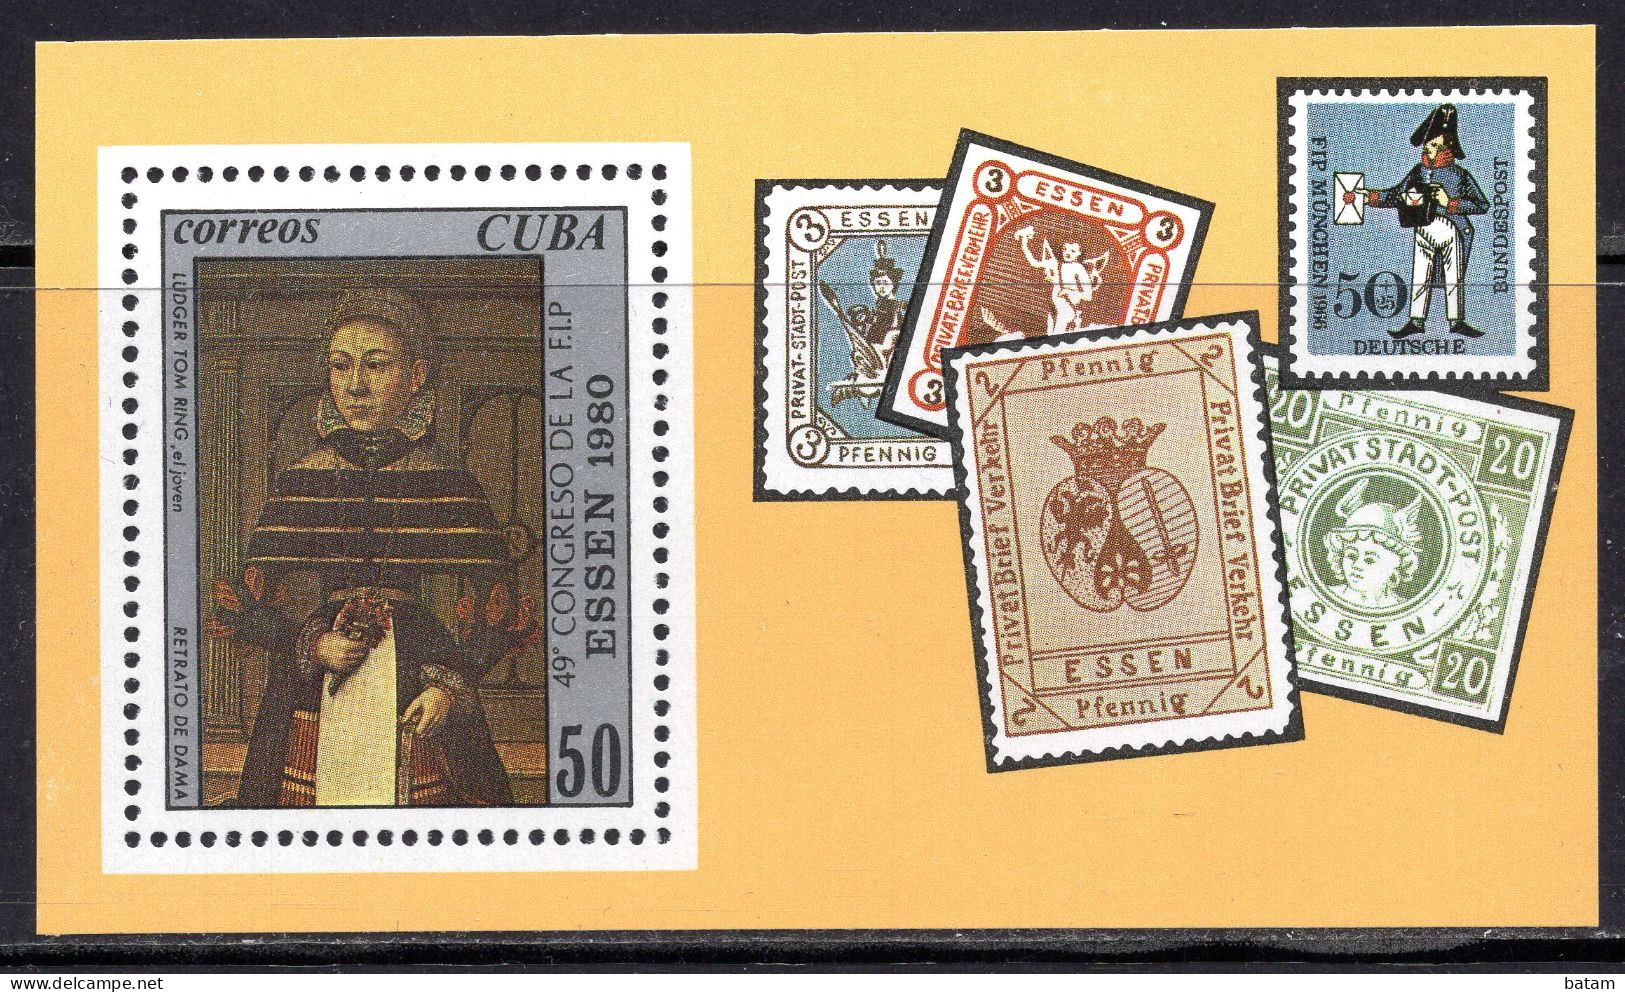 Cuba 1980 - Philatelic Federation Congress - Essen - Stamp On Stamp - MNH S/S - Ongebruikt